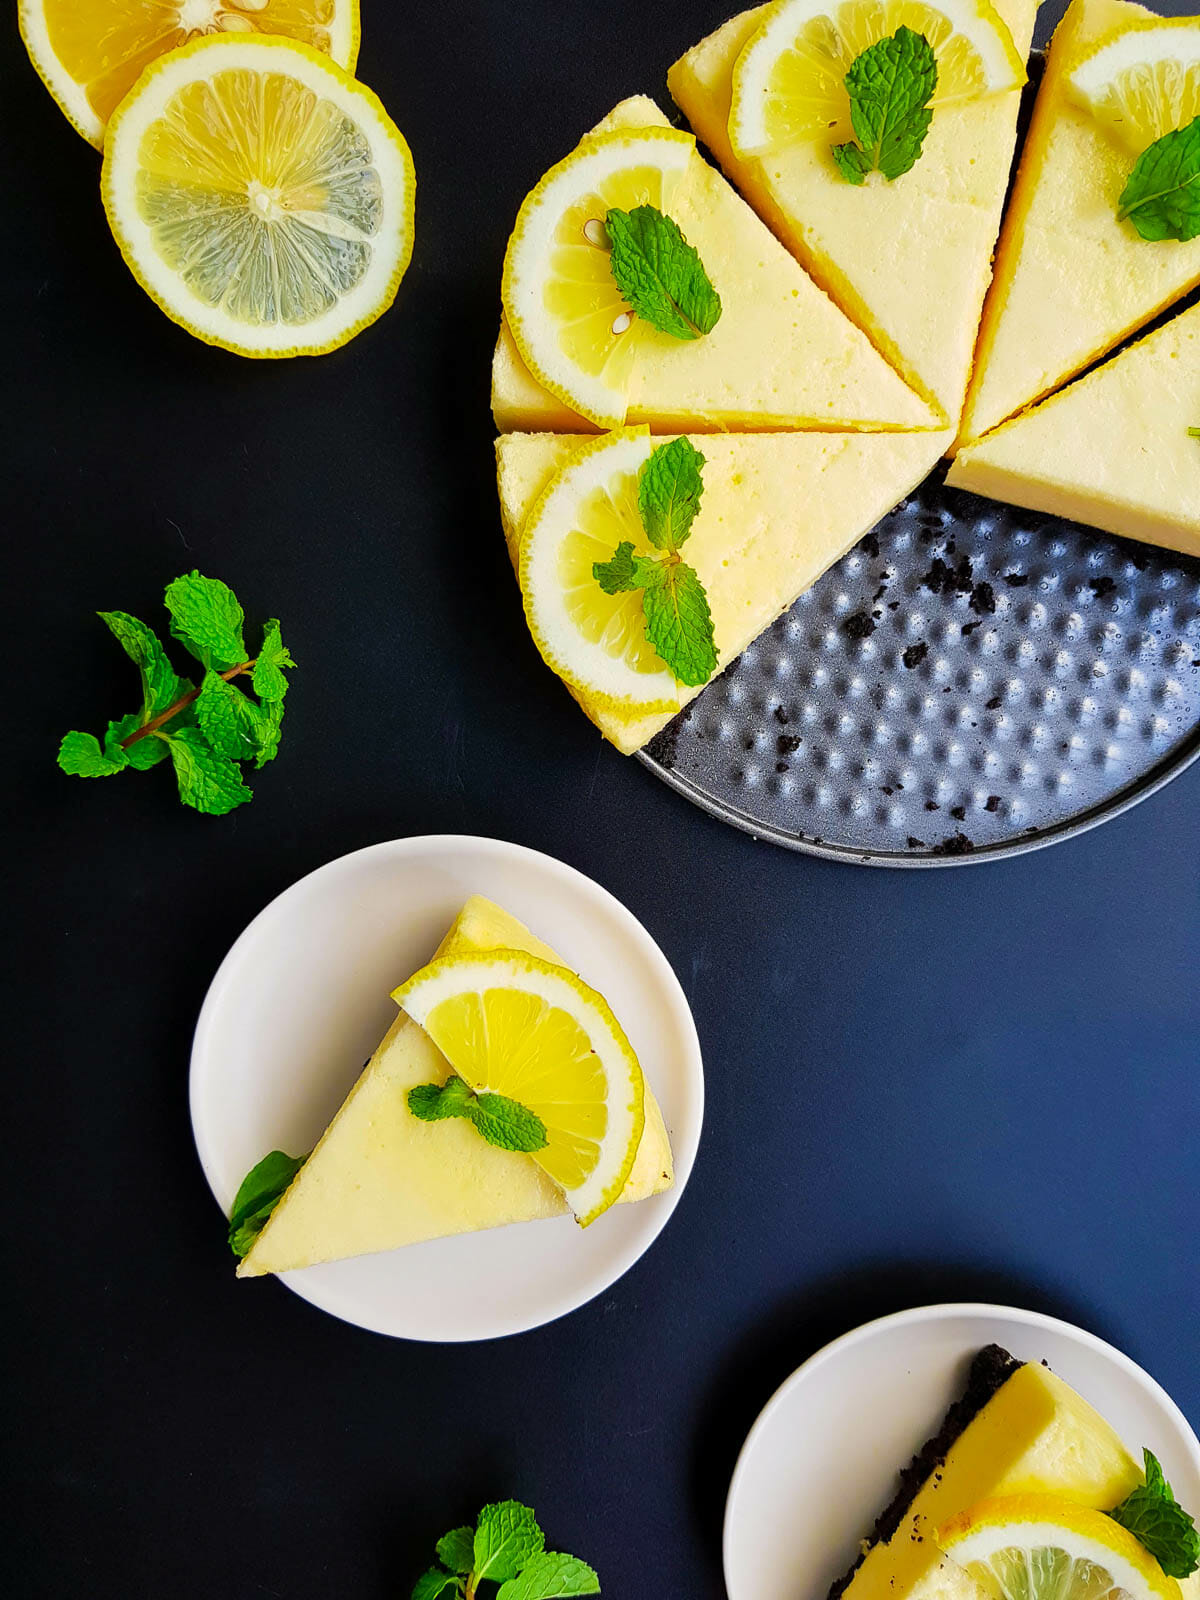 7 slices of lemon cake garnished with mint leaves and lemon slices